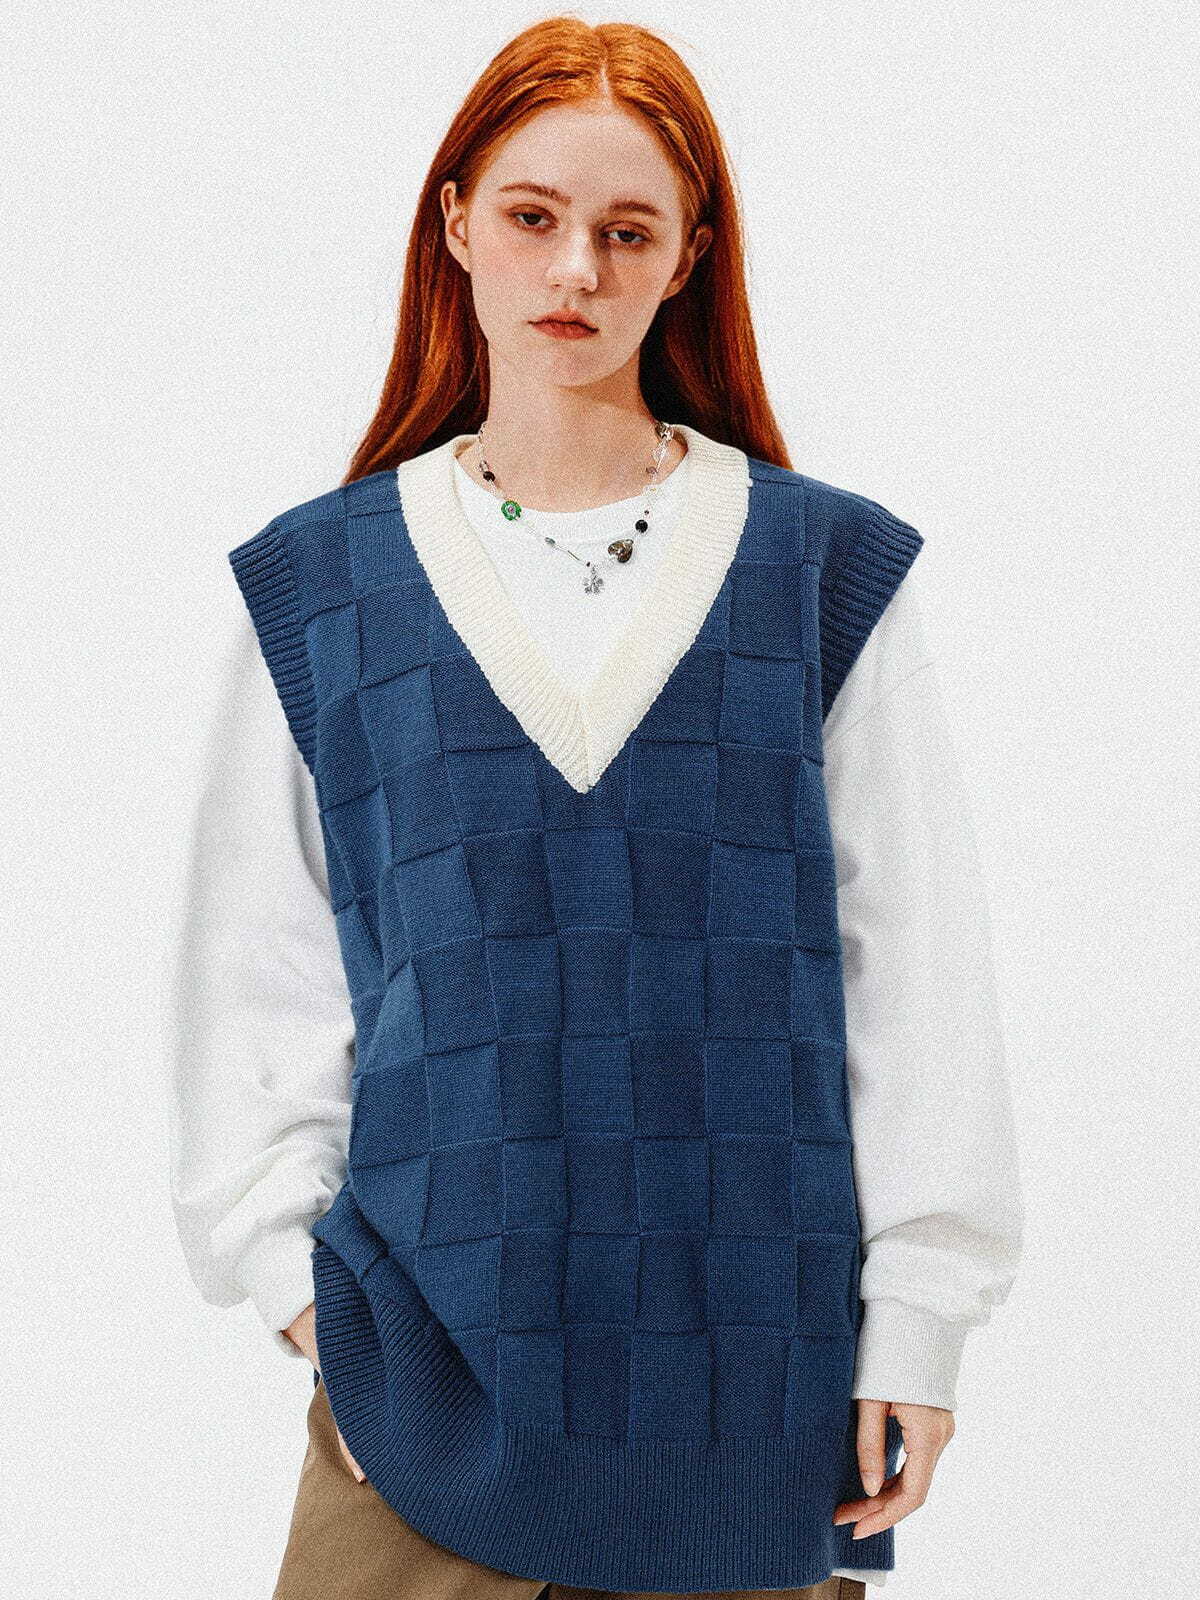 lattice sweater vest retro streetwear essential 5110